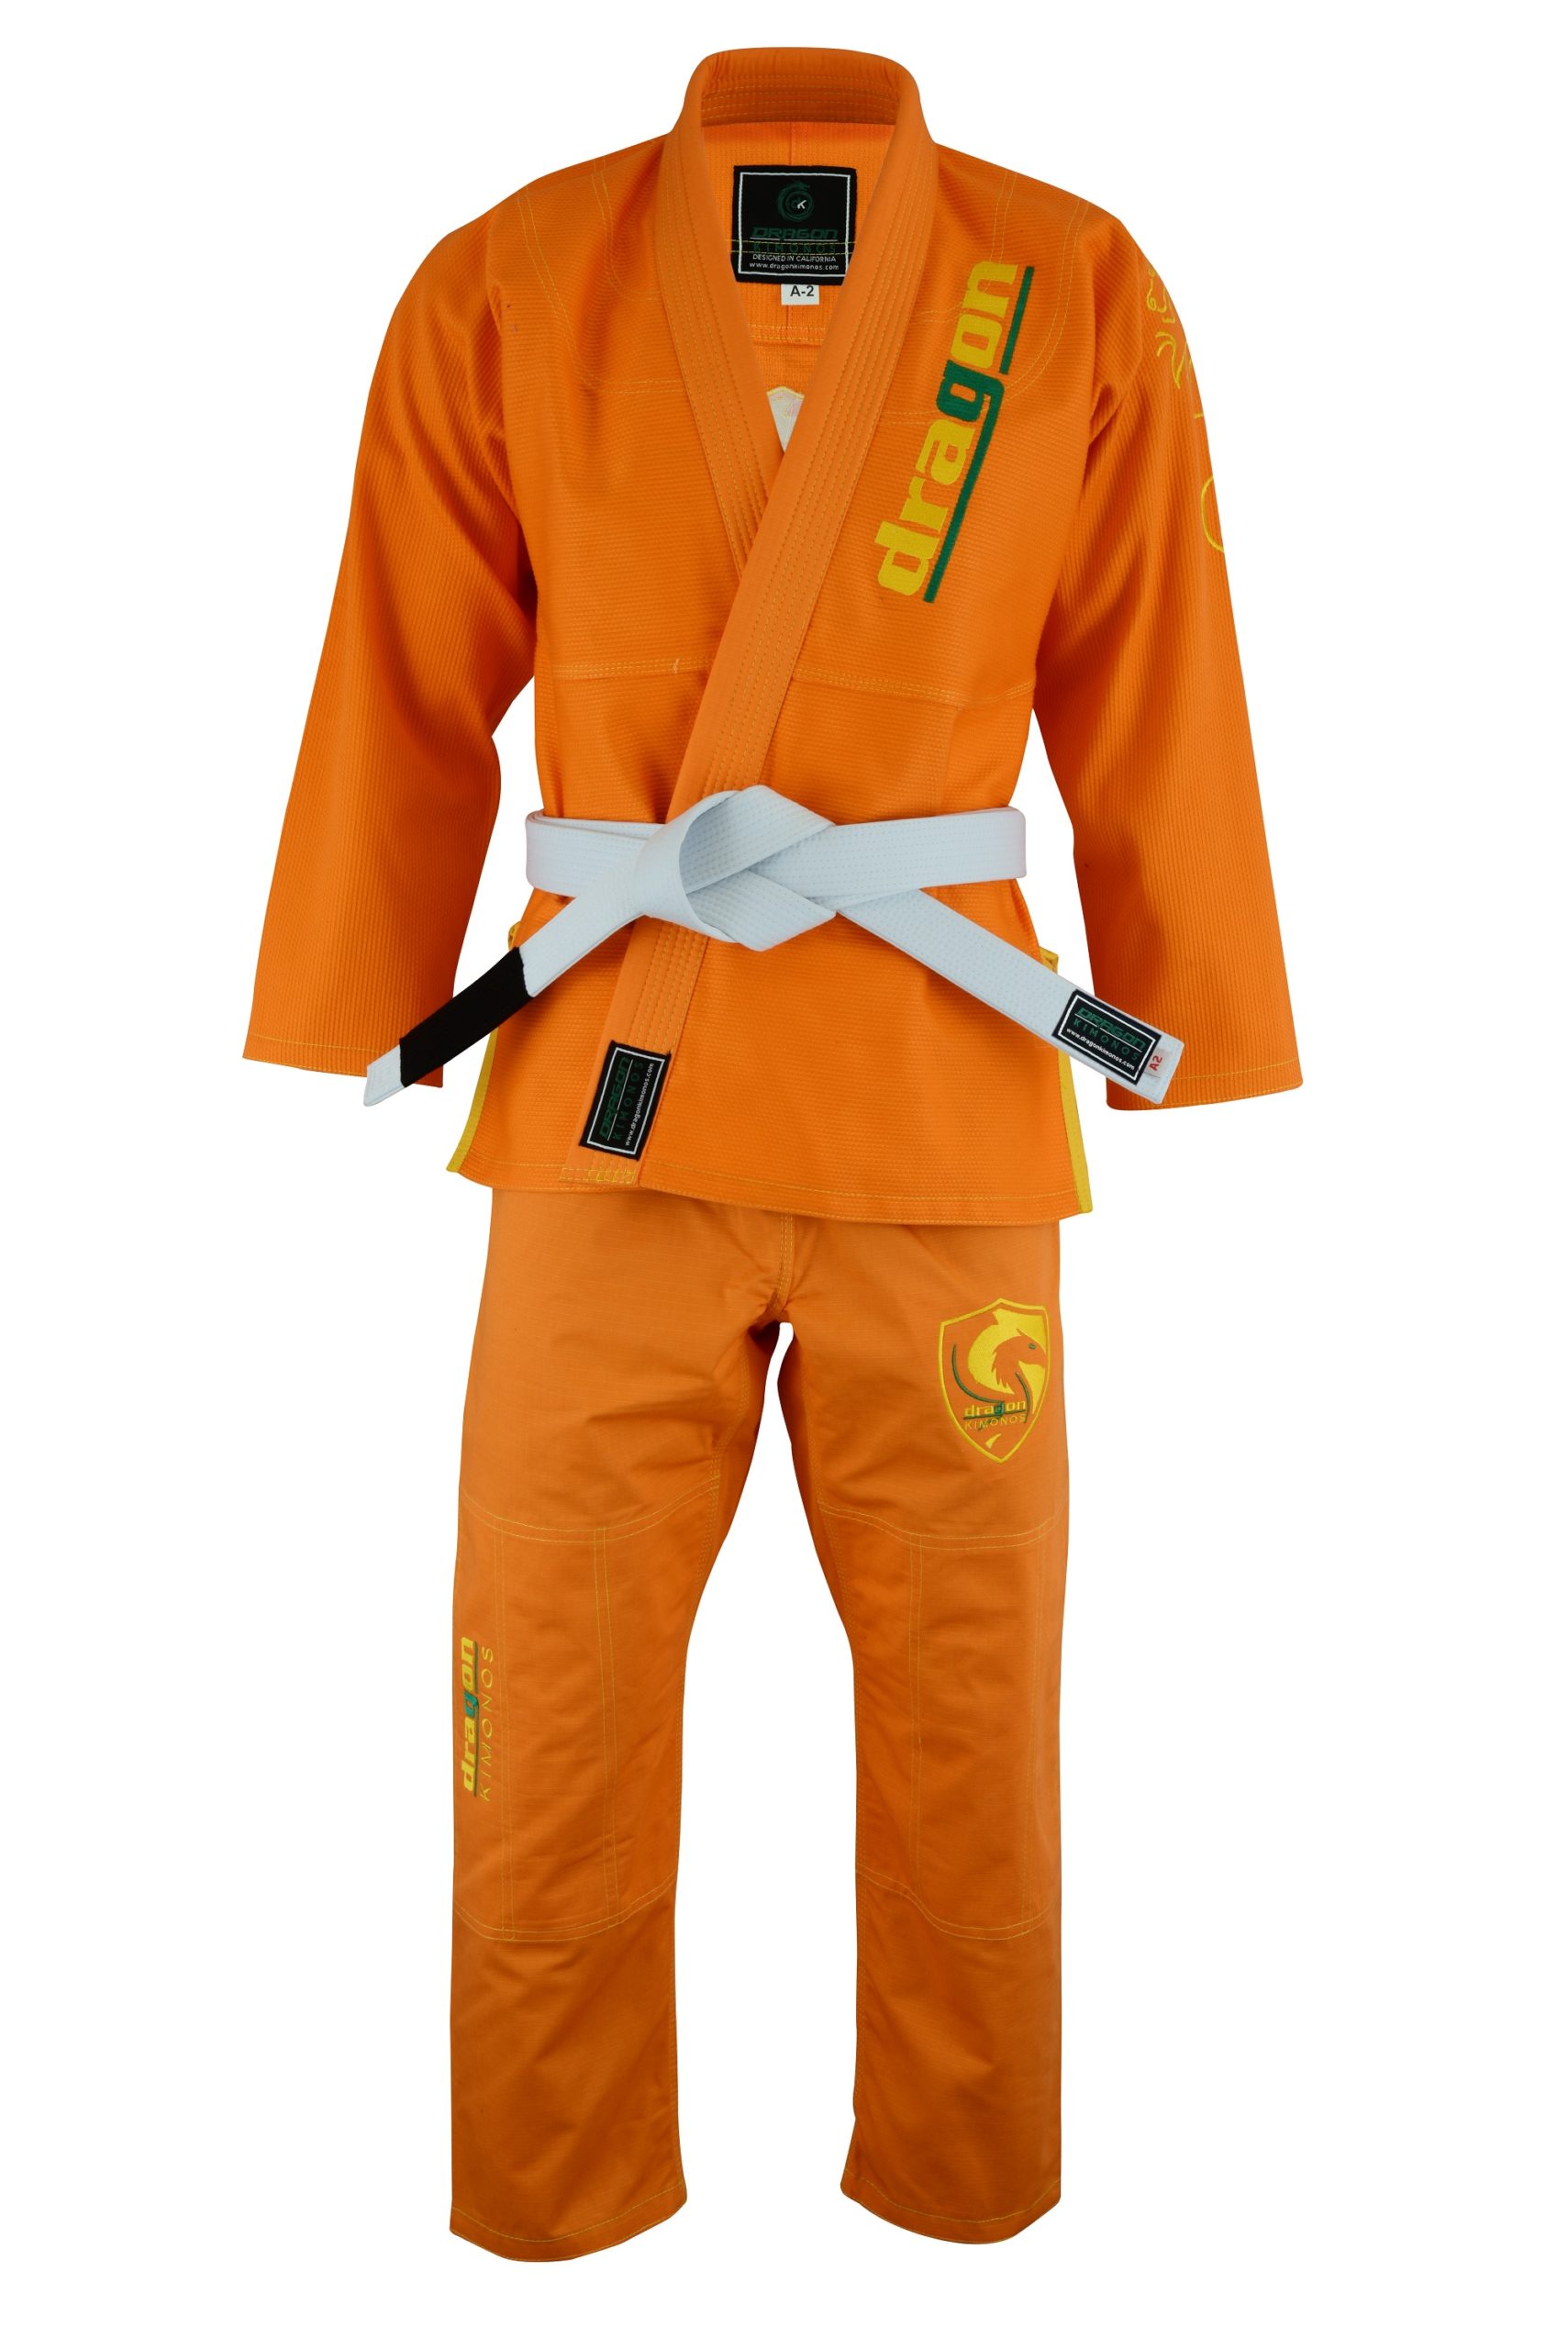 Adults BJJ Gi Competition Kimono Brazilian Jiu Jitsu Uniform MMA Grappling